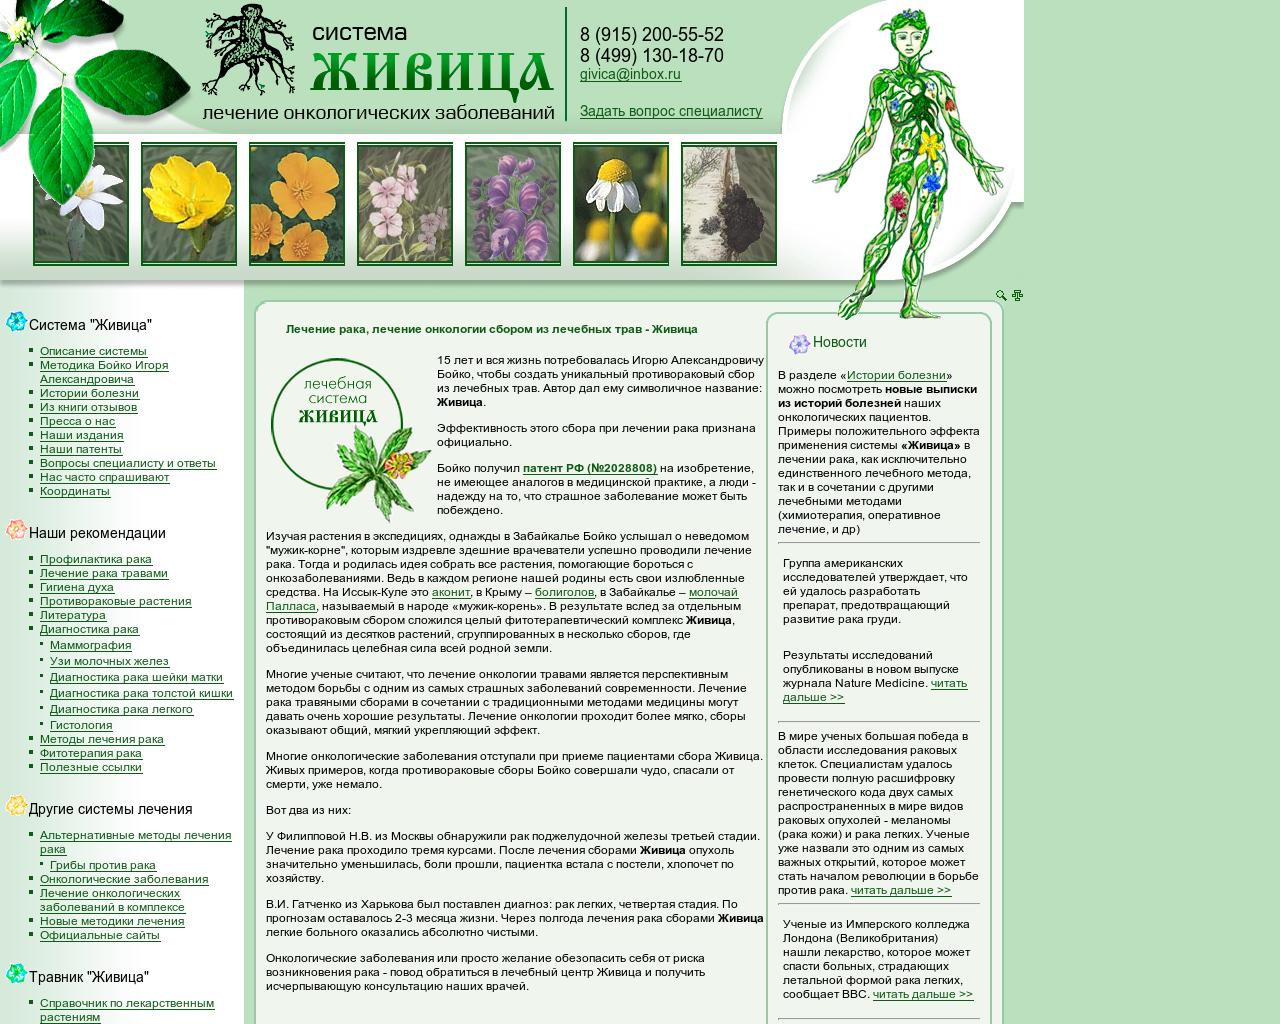 Изображение сайта givica.ru в разрешении 1280x1024